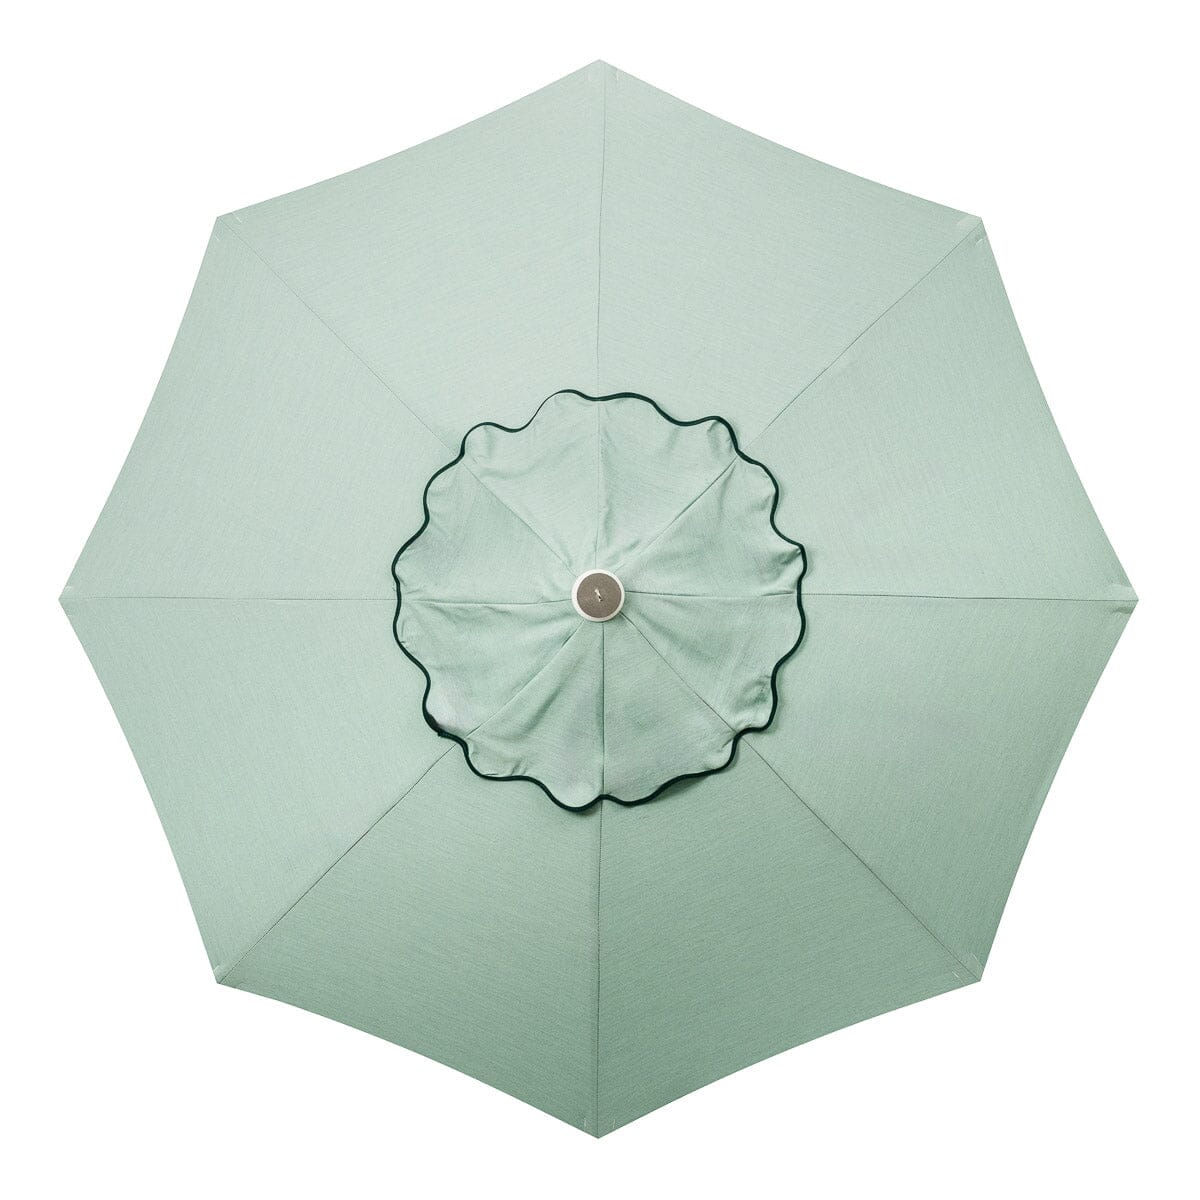 The Market Umbrella - Rivie Green Market Umbrella Business & Pleasure Co 